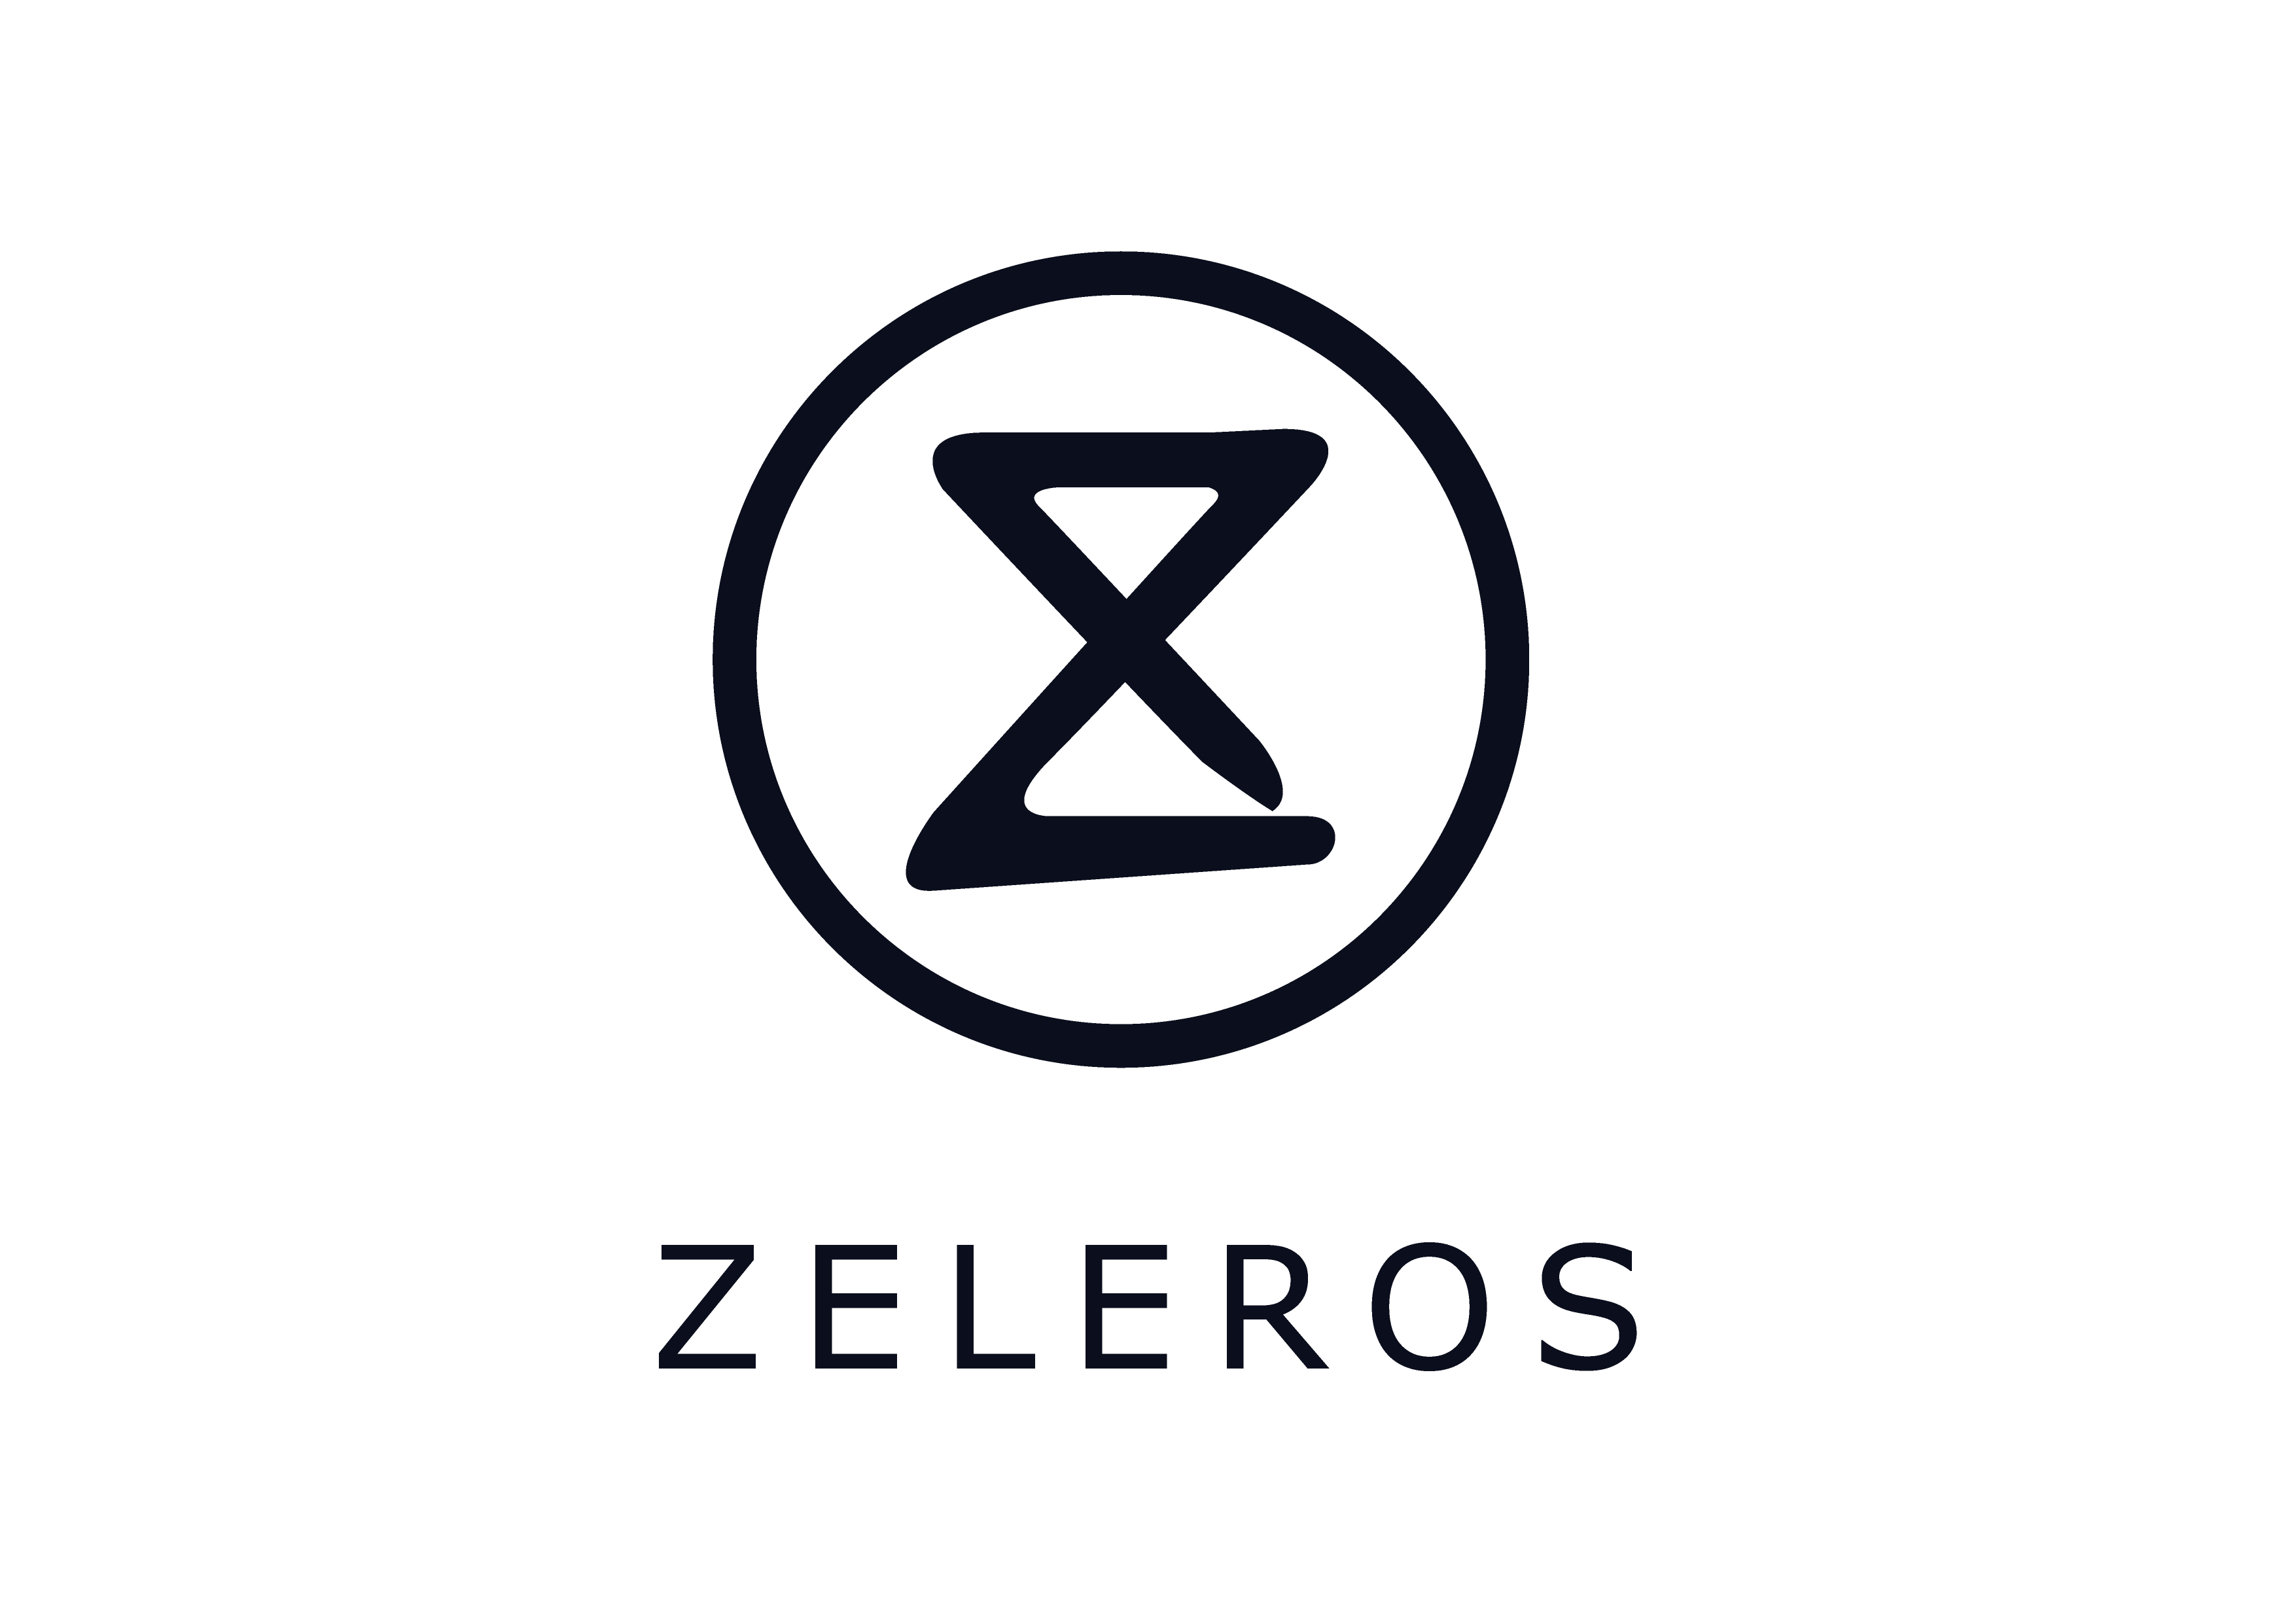 Zeleros’s logo